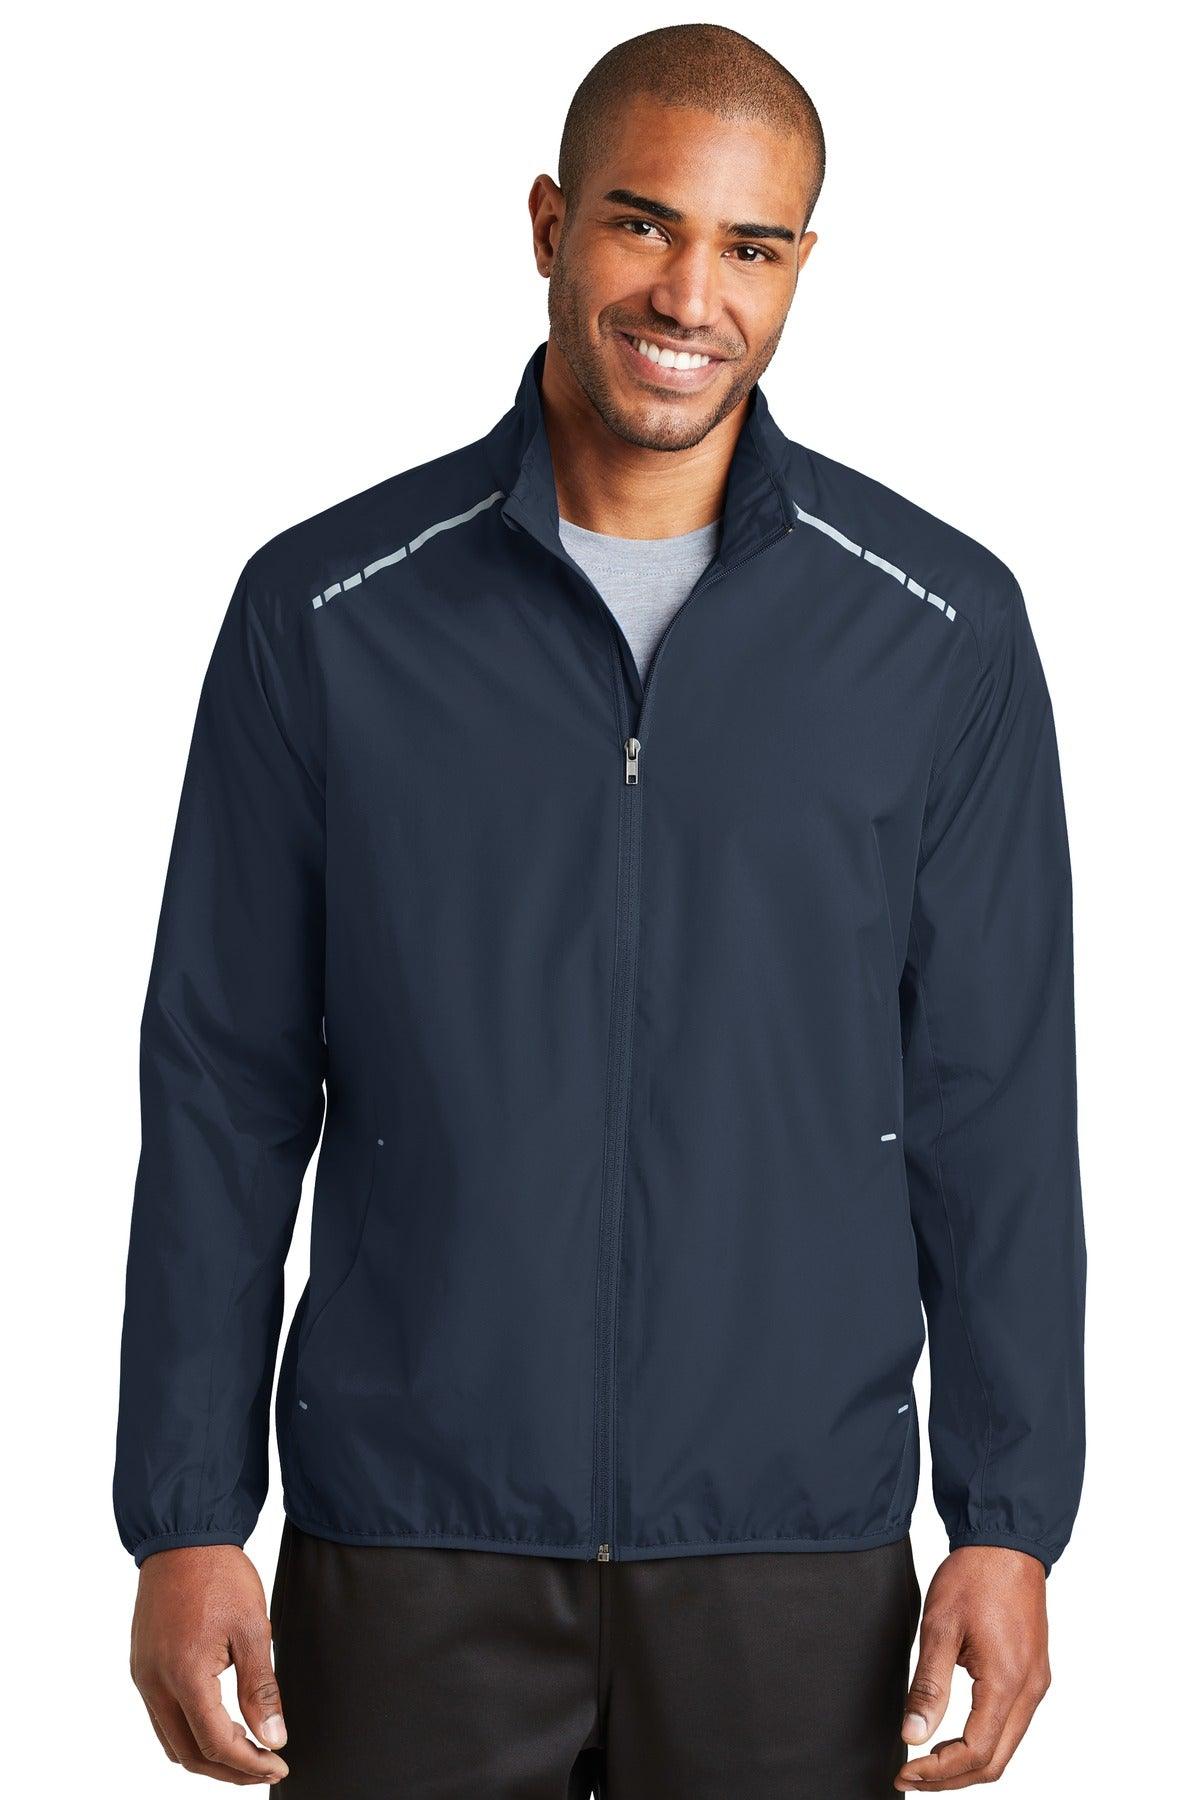 Port Authority Zephyr Reflective Hit Full-Zip Jacket. J345 - Dresses Max